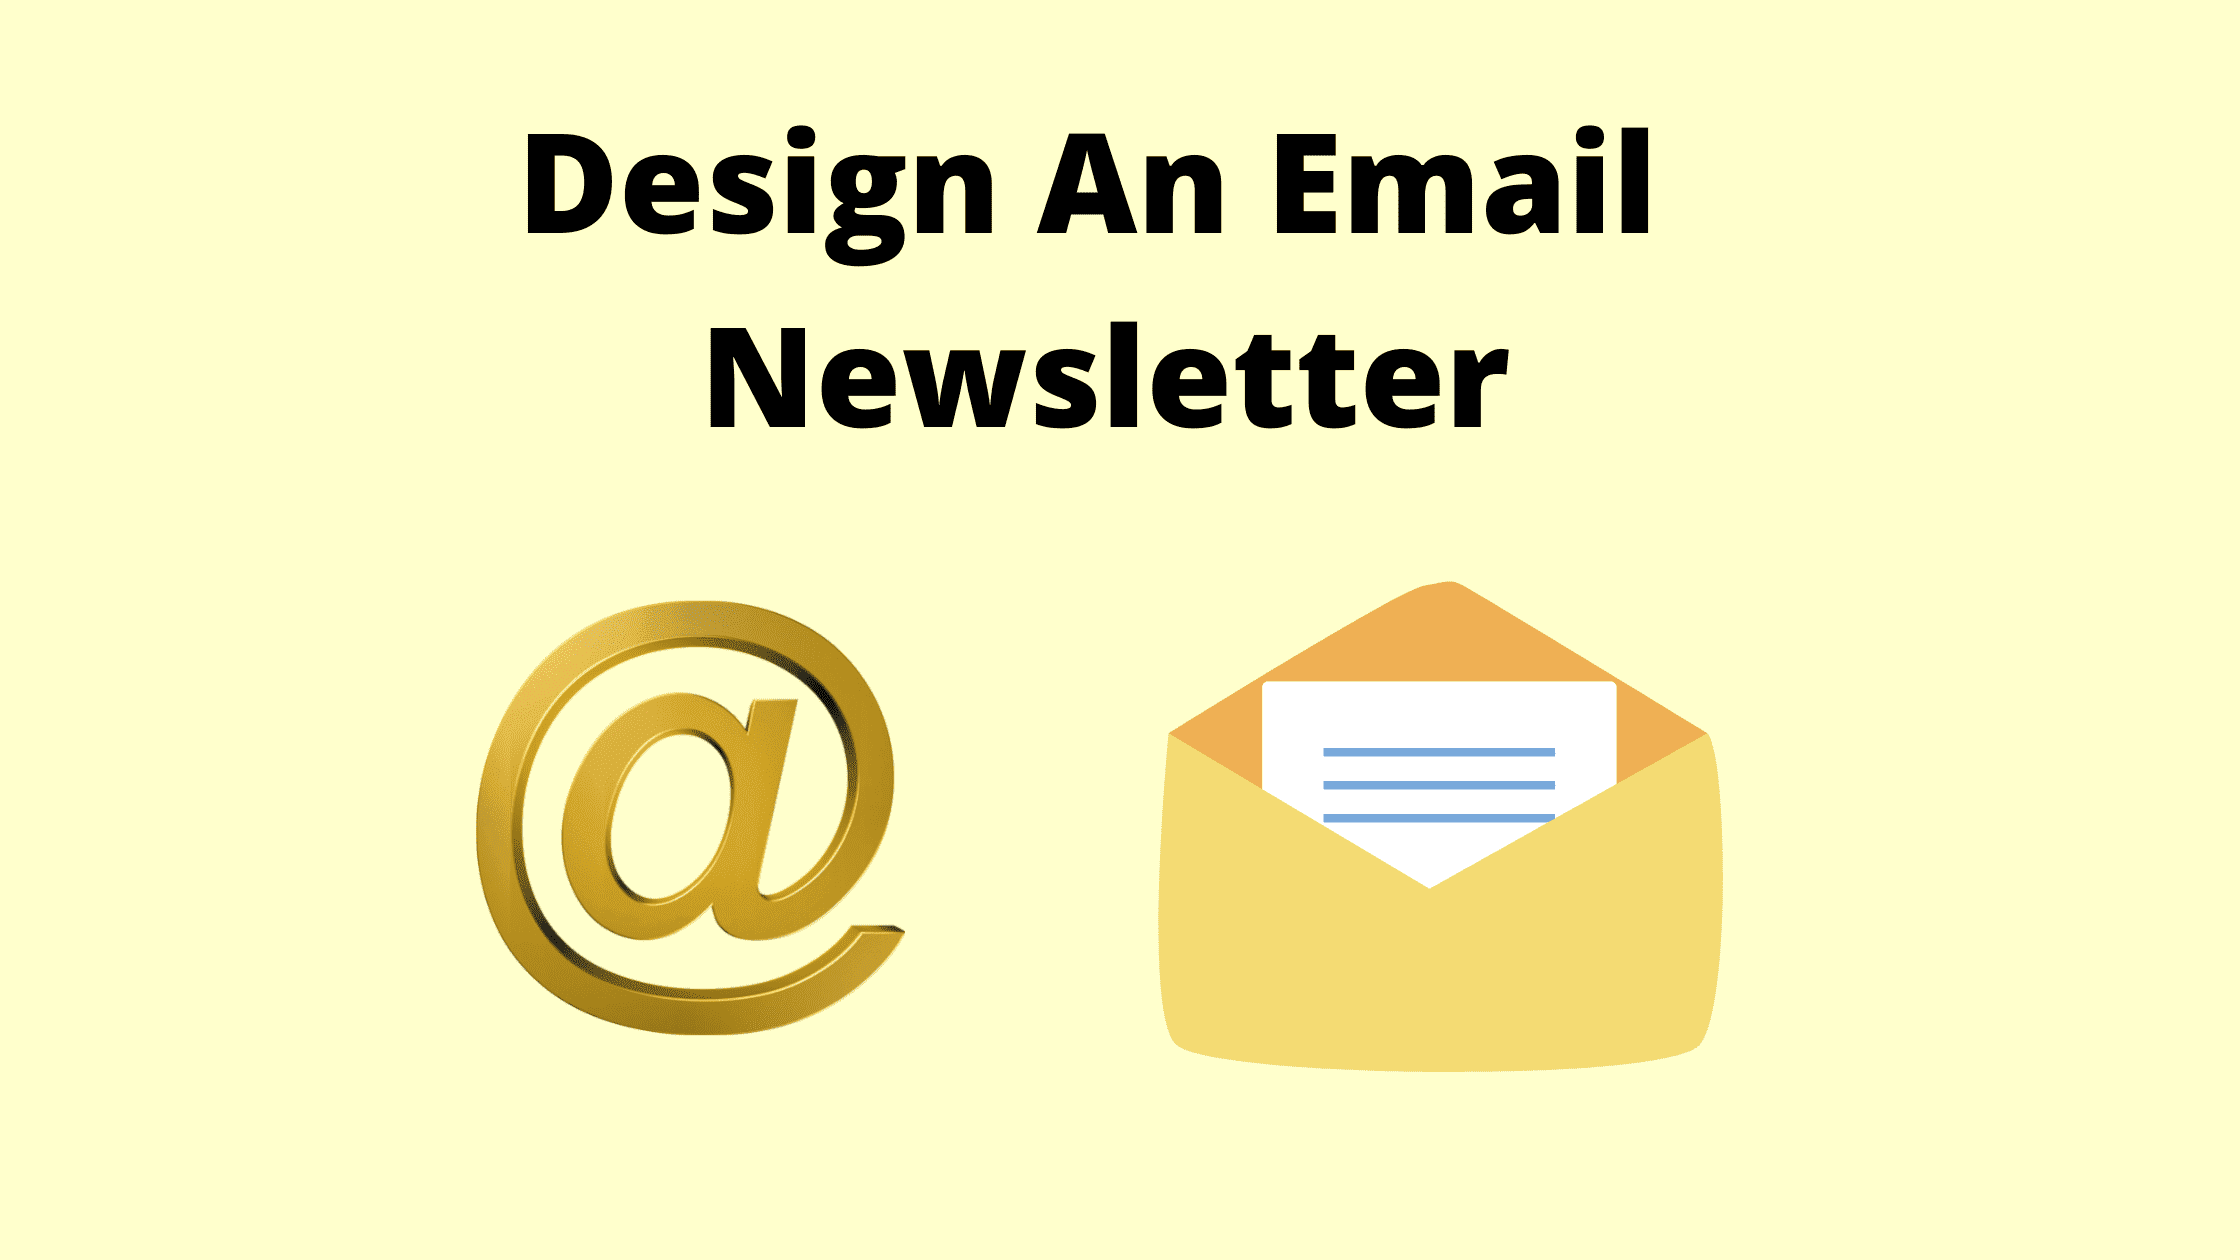 Design An Email Newsletter